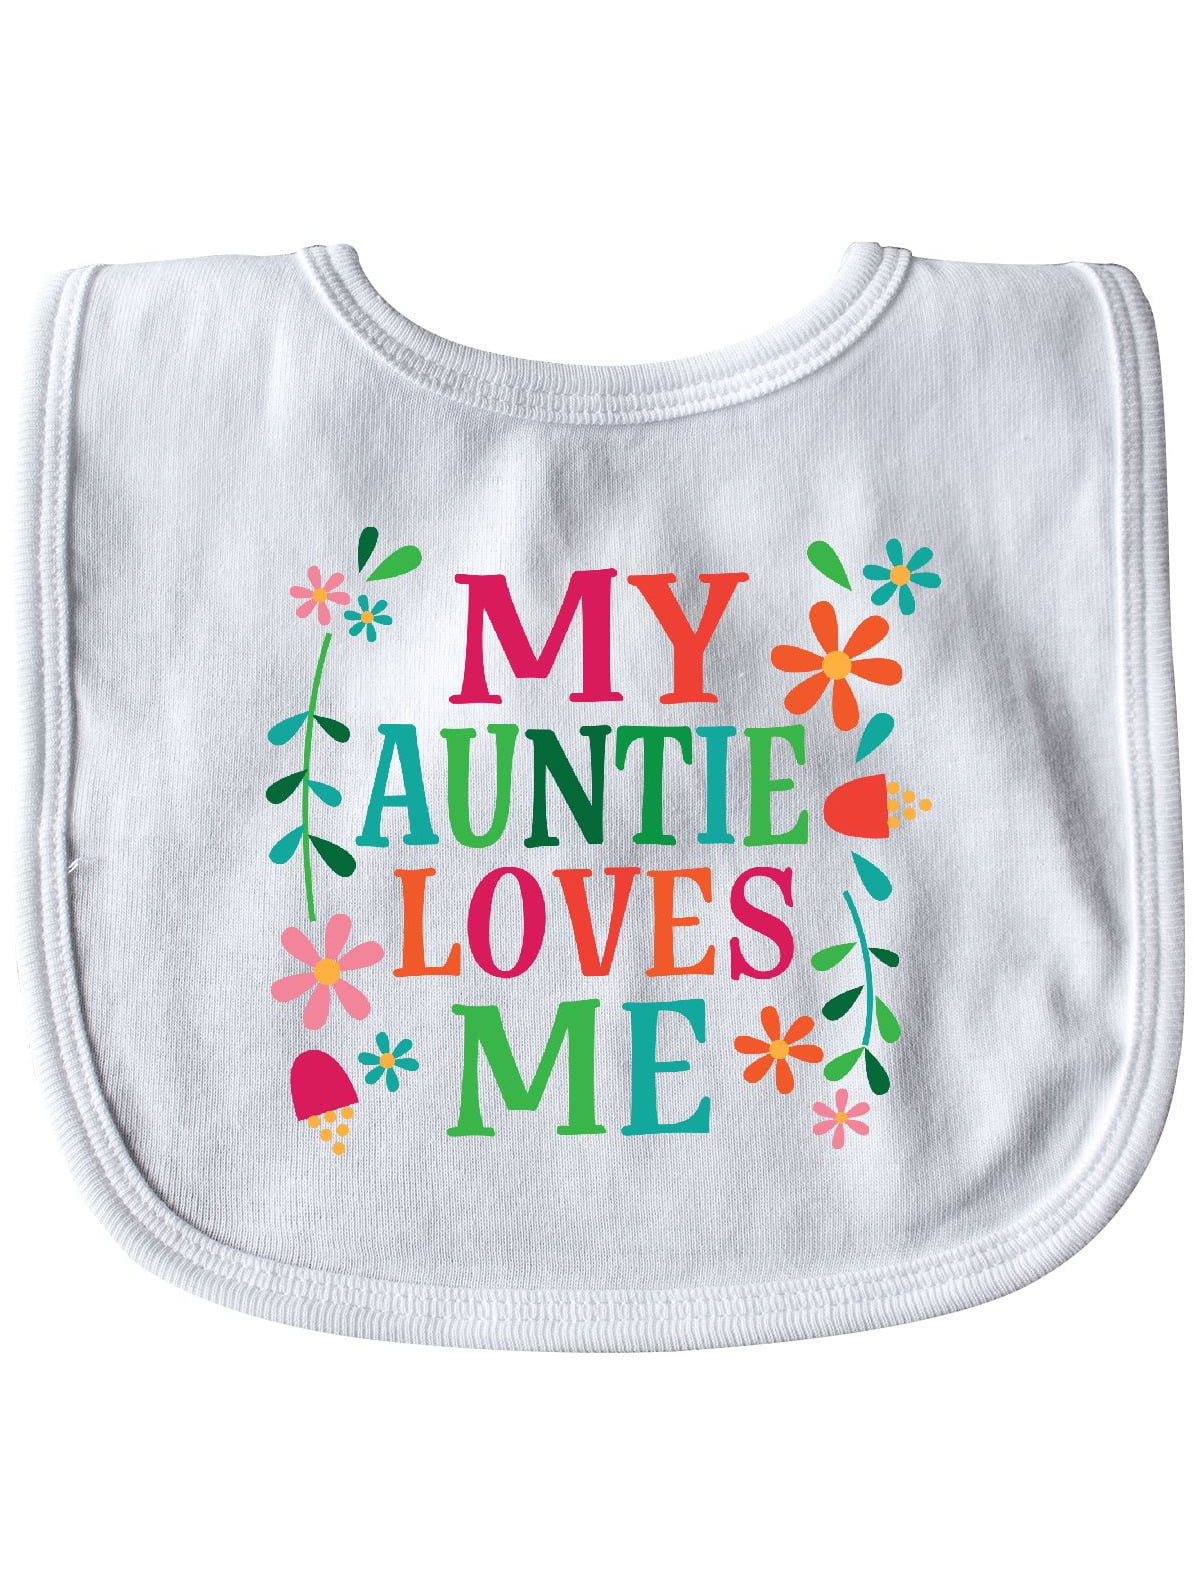 My Auntie Loves Me Girls Baby Bib - Walmart.com - Walmart.com